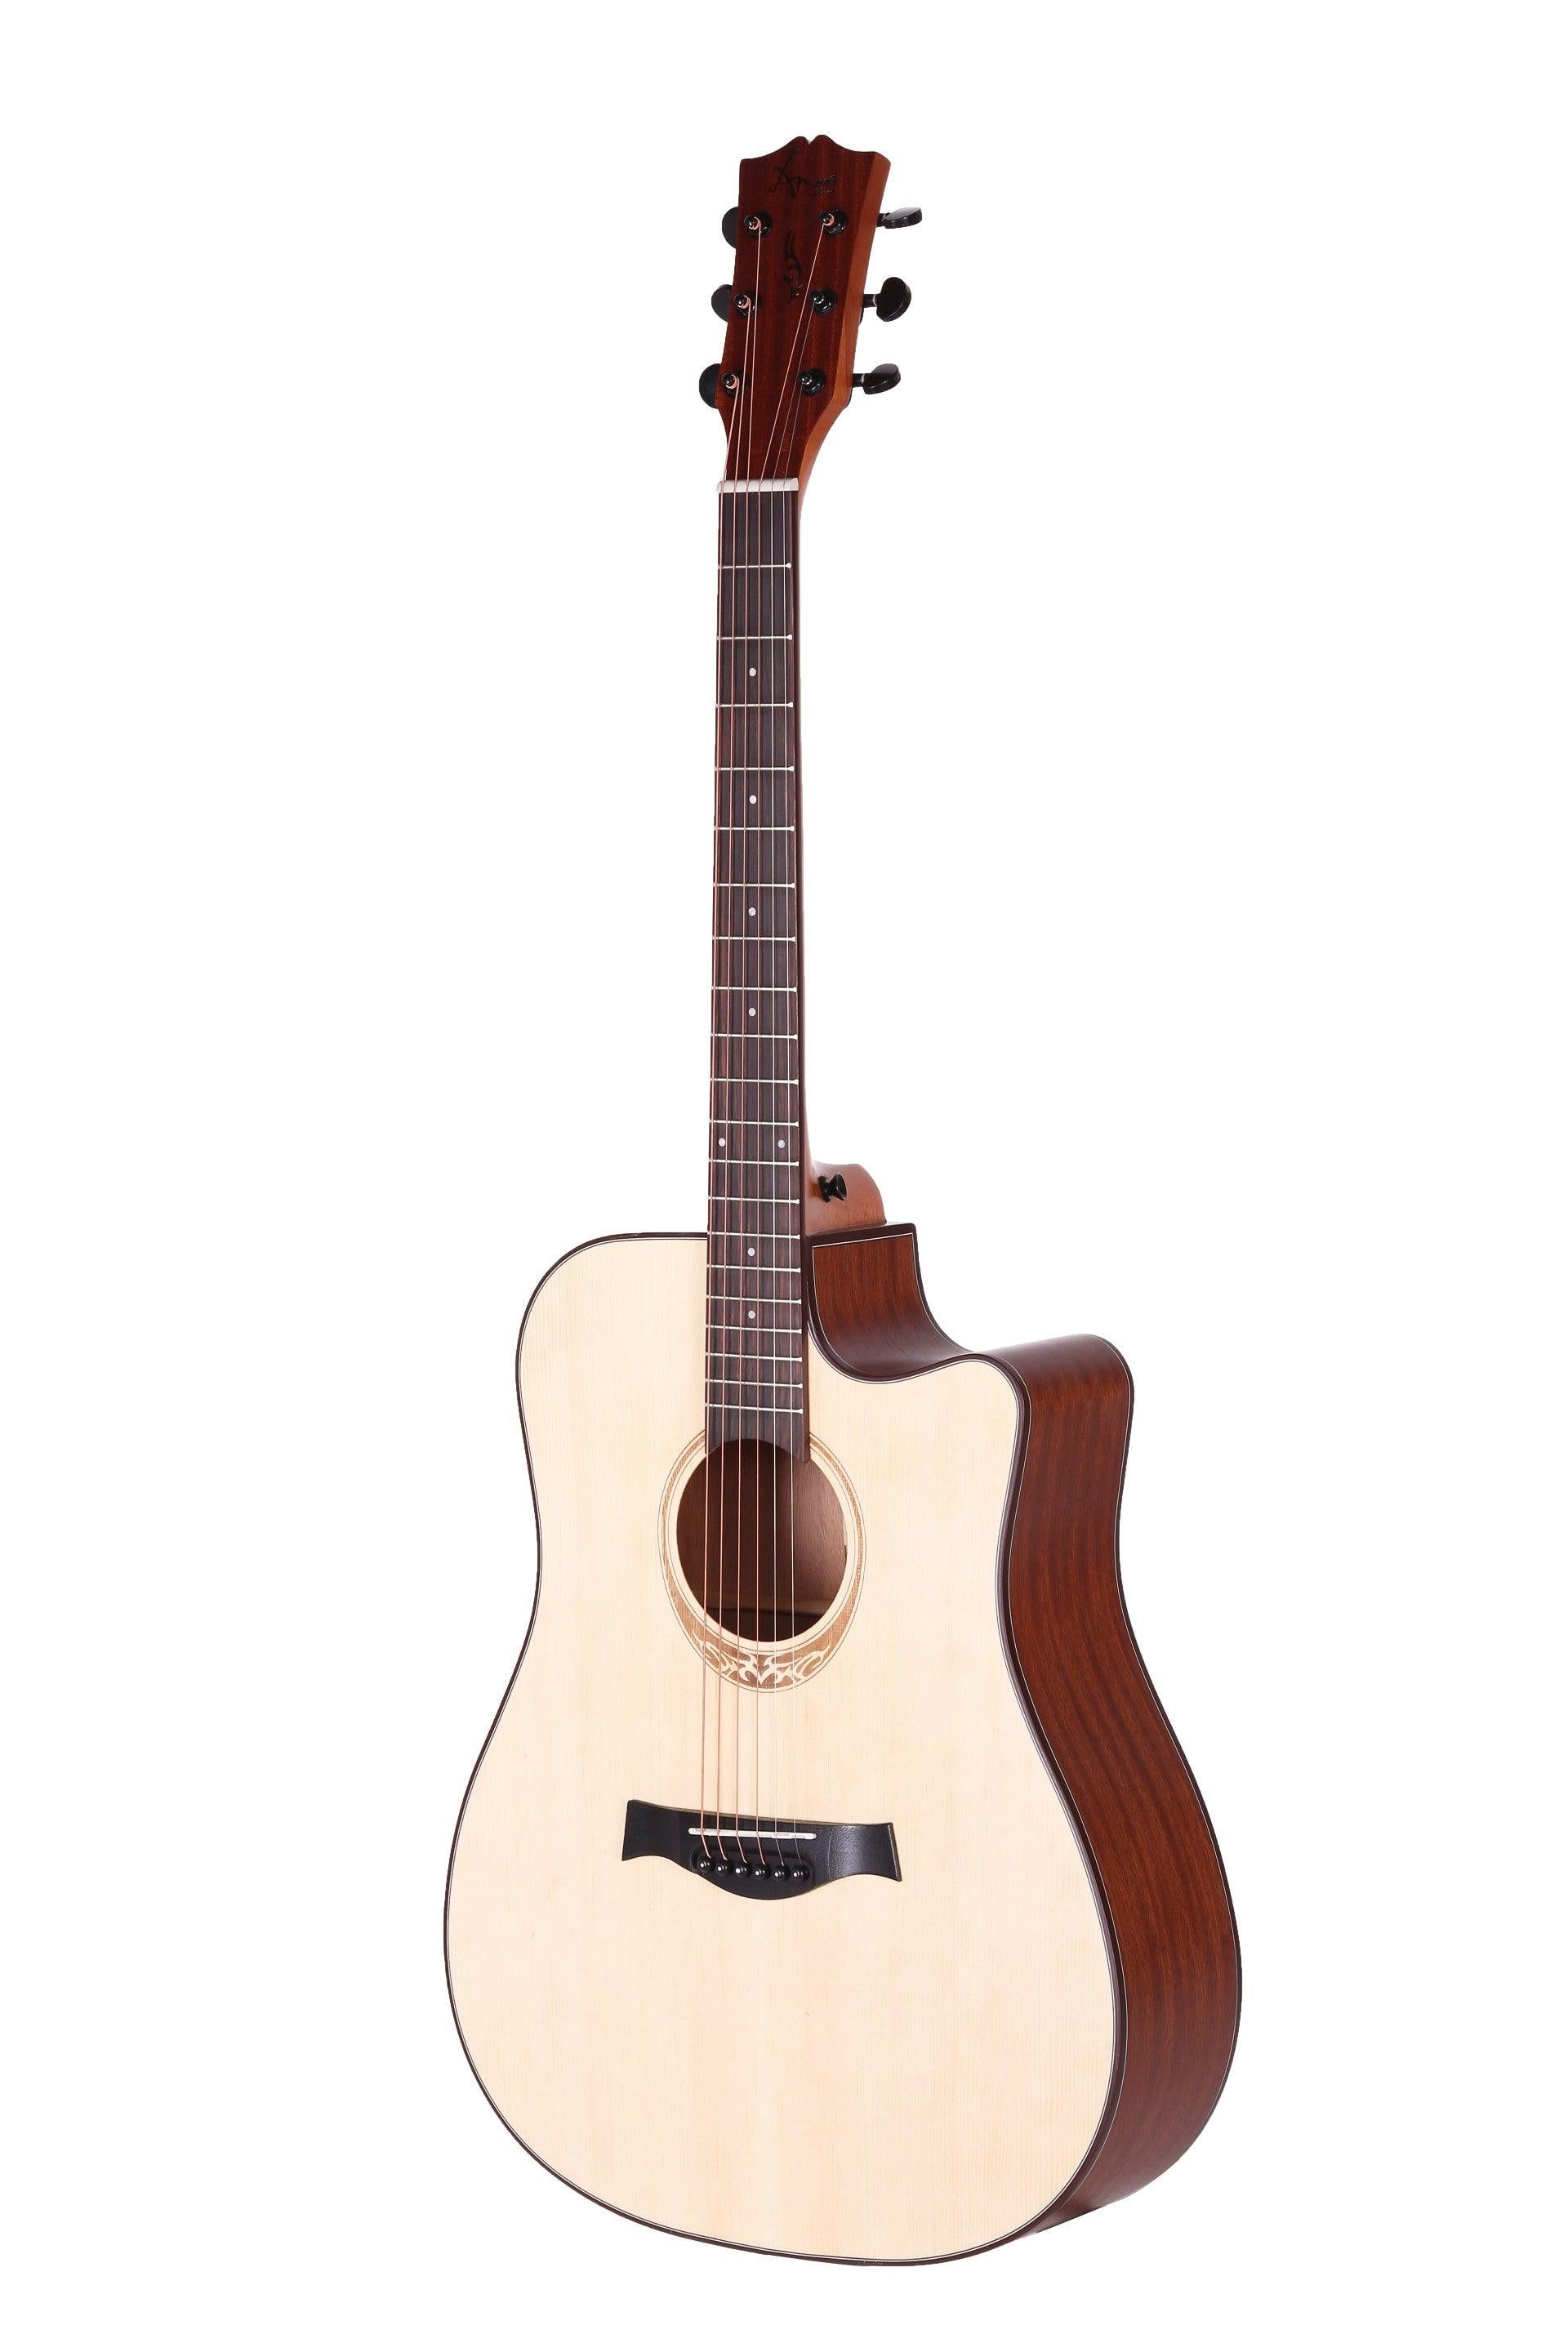 Amari Am-418ce Spruce Top Acoustic Guitar